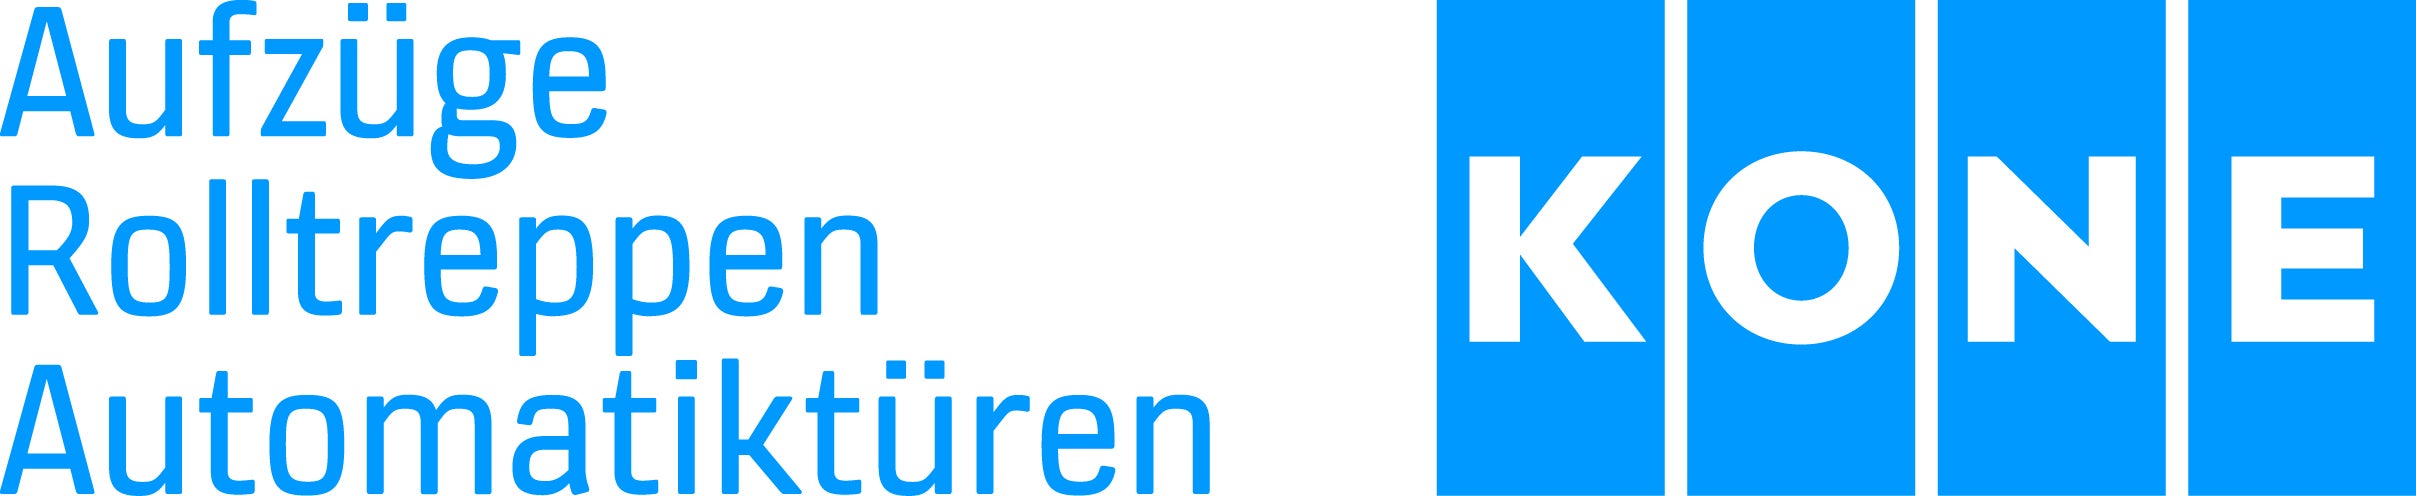 KONE Logo+Zusatz_links_blau.jpg